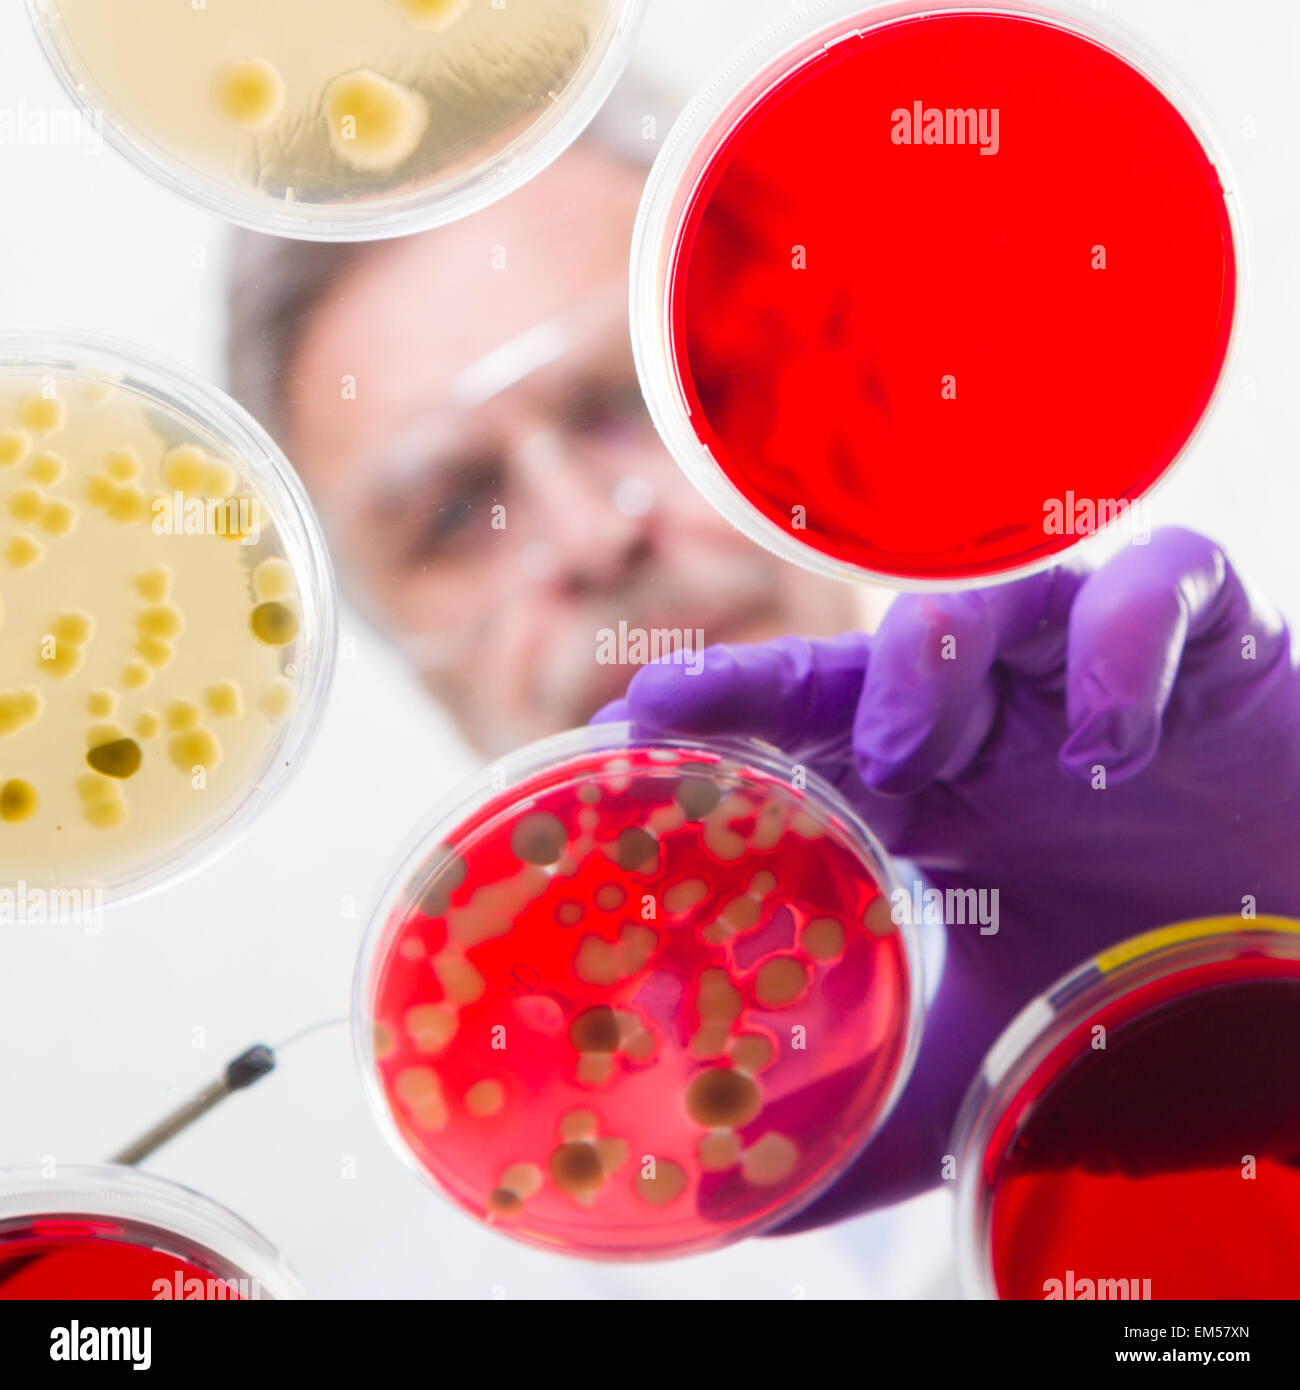 Senior life science researcher grafting bacteria. Stock Photo